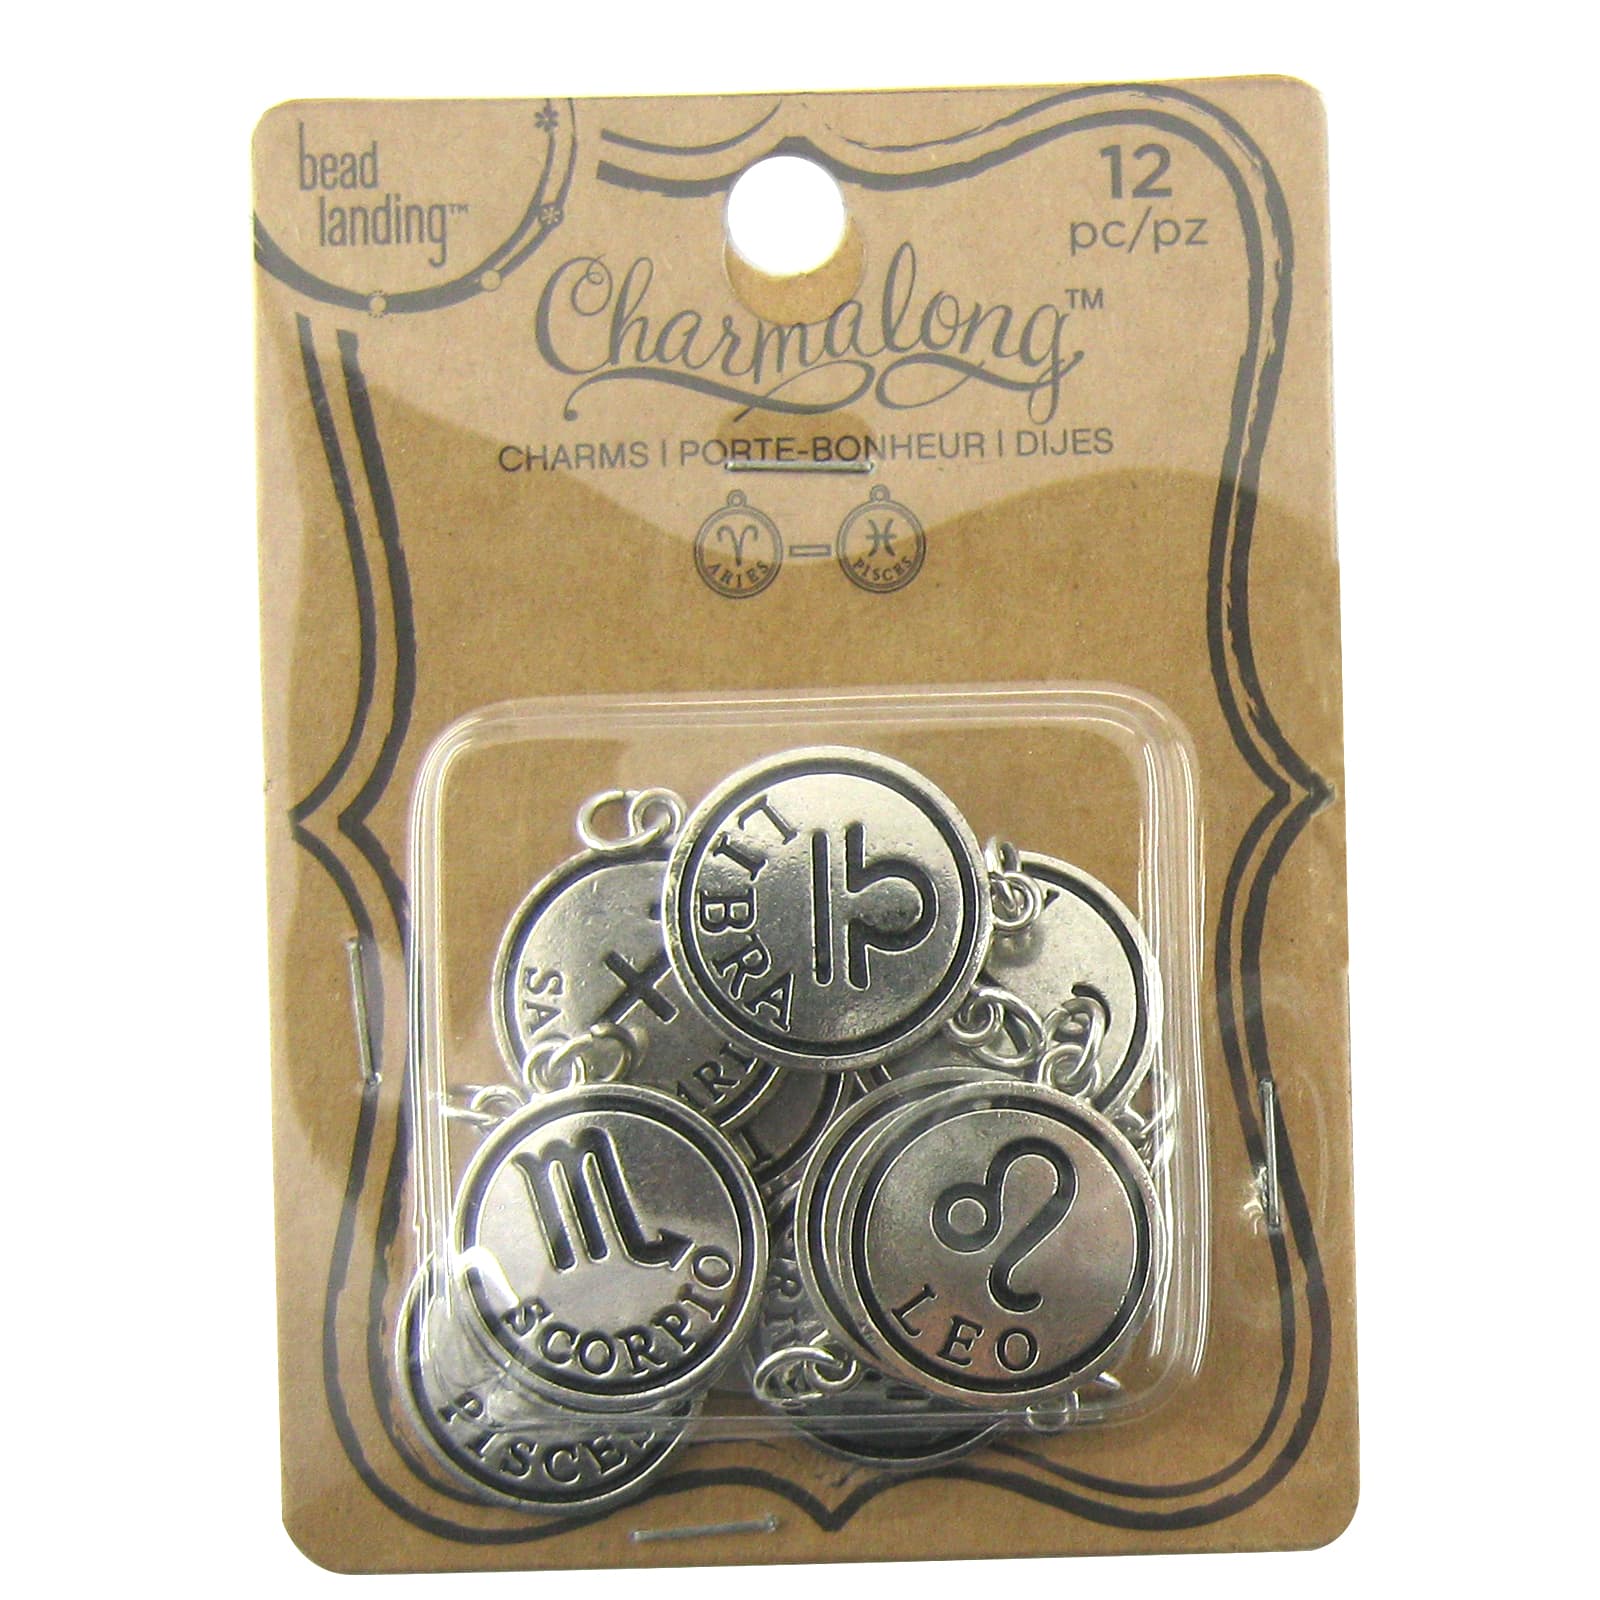 Charmalong&#x2122; Rhodium Zodiac Charms by Bead Landing&#x2122;